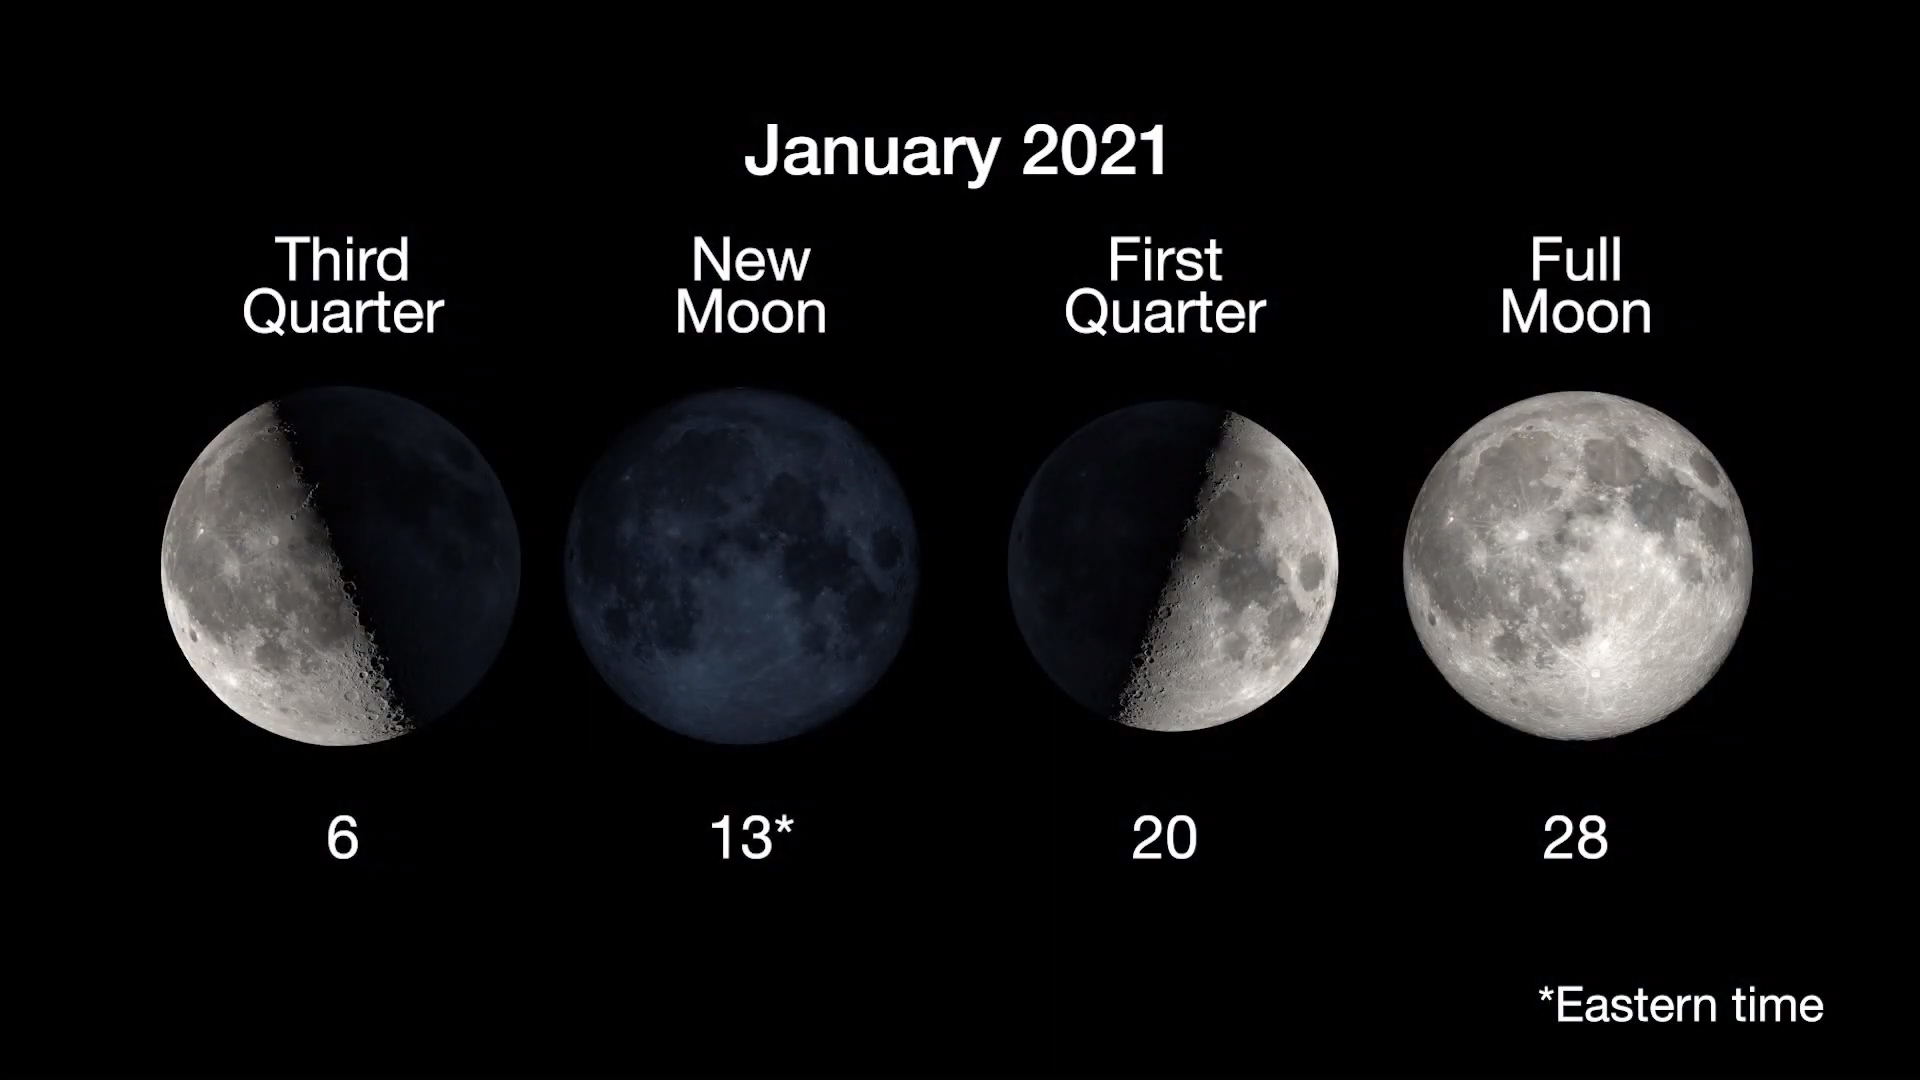 Moon Phases in January 2021: Full Moon Jan. 28